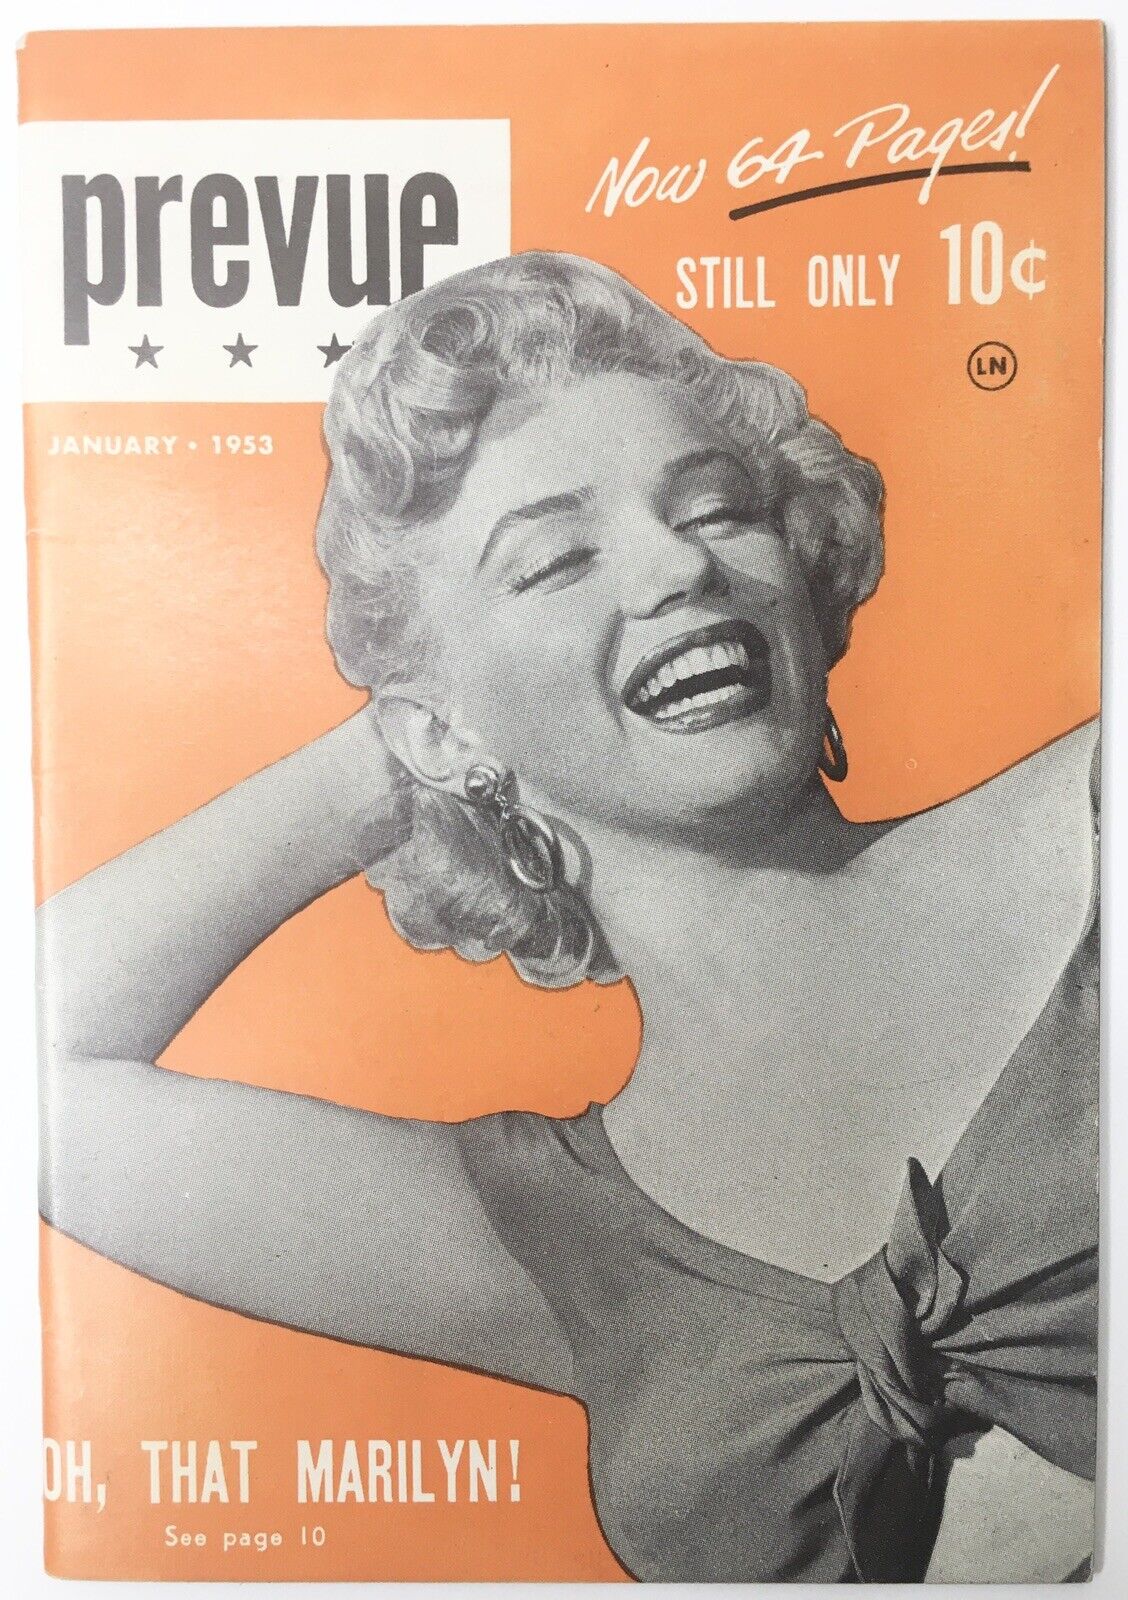 1953 Prevue Magazine / Marilyn Monroe Cover